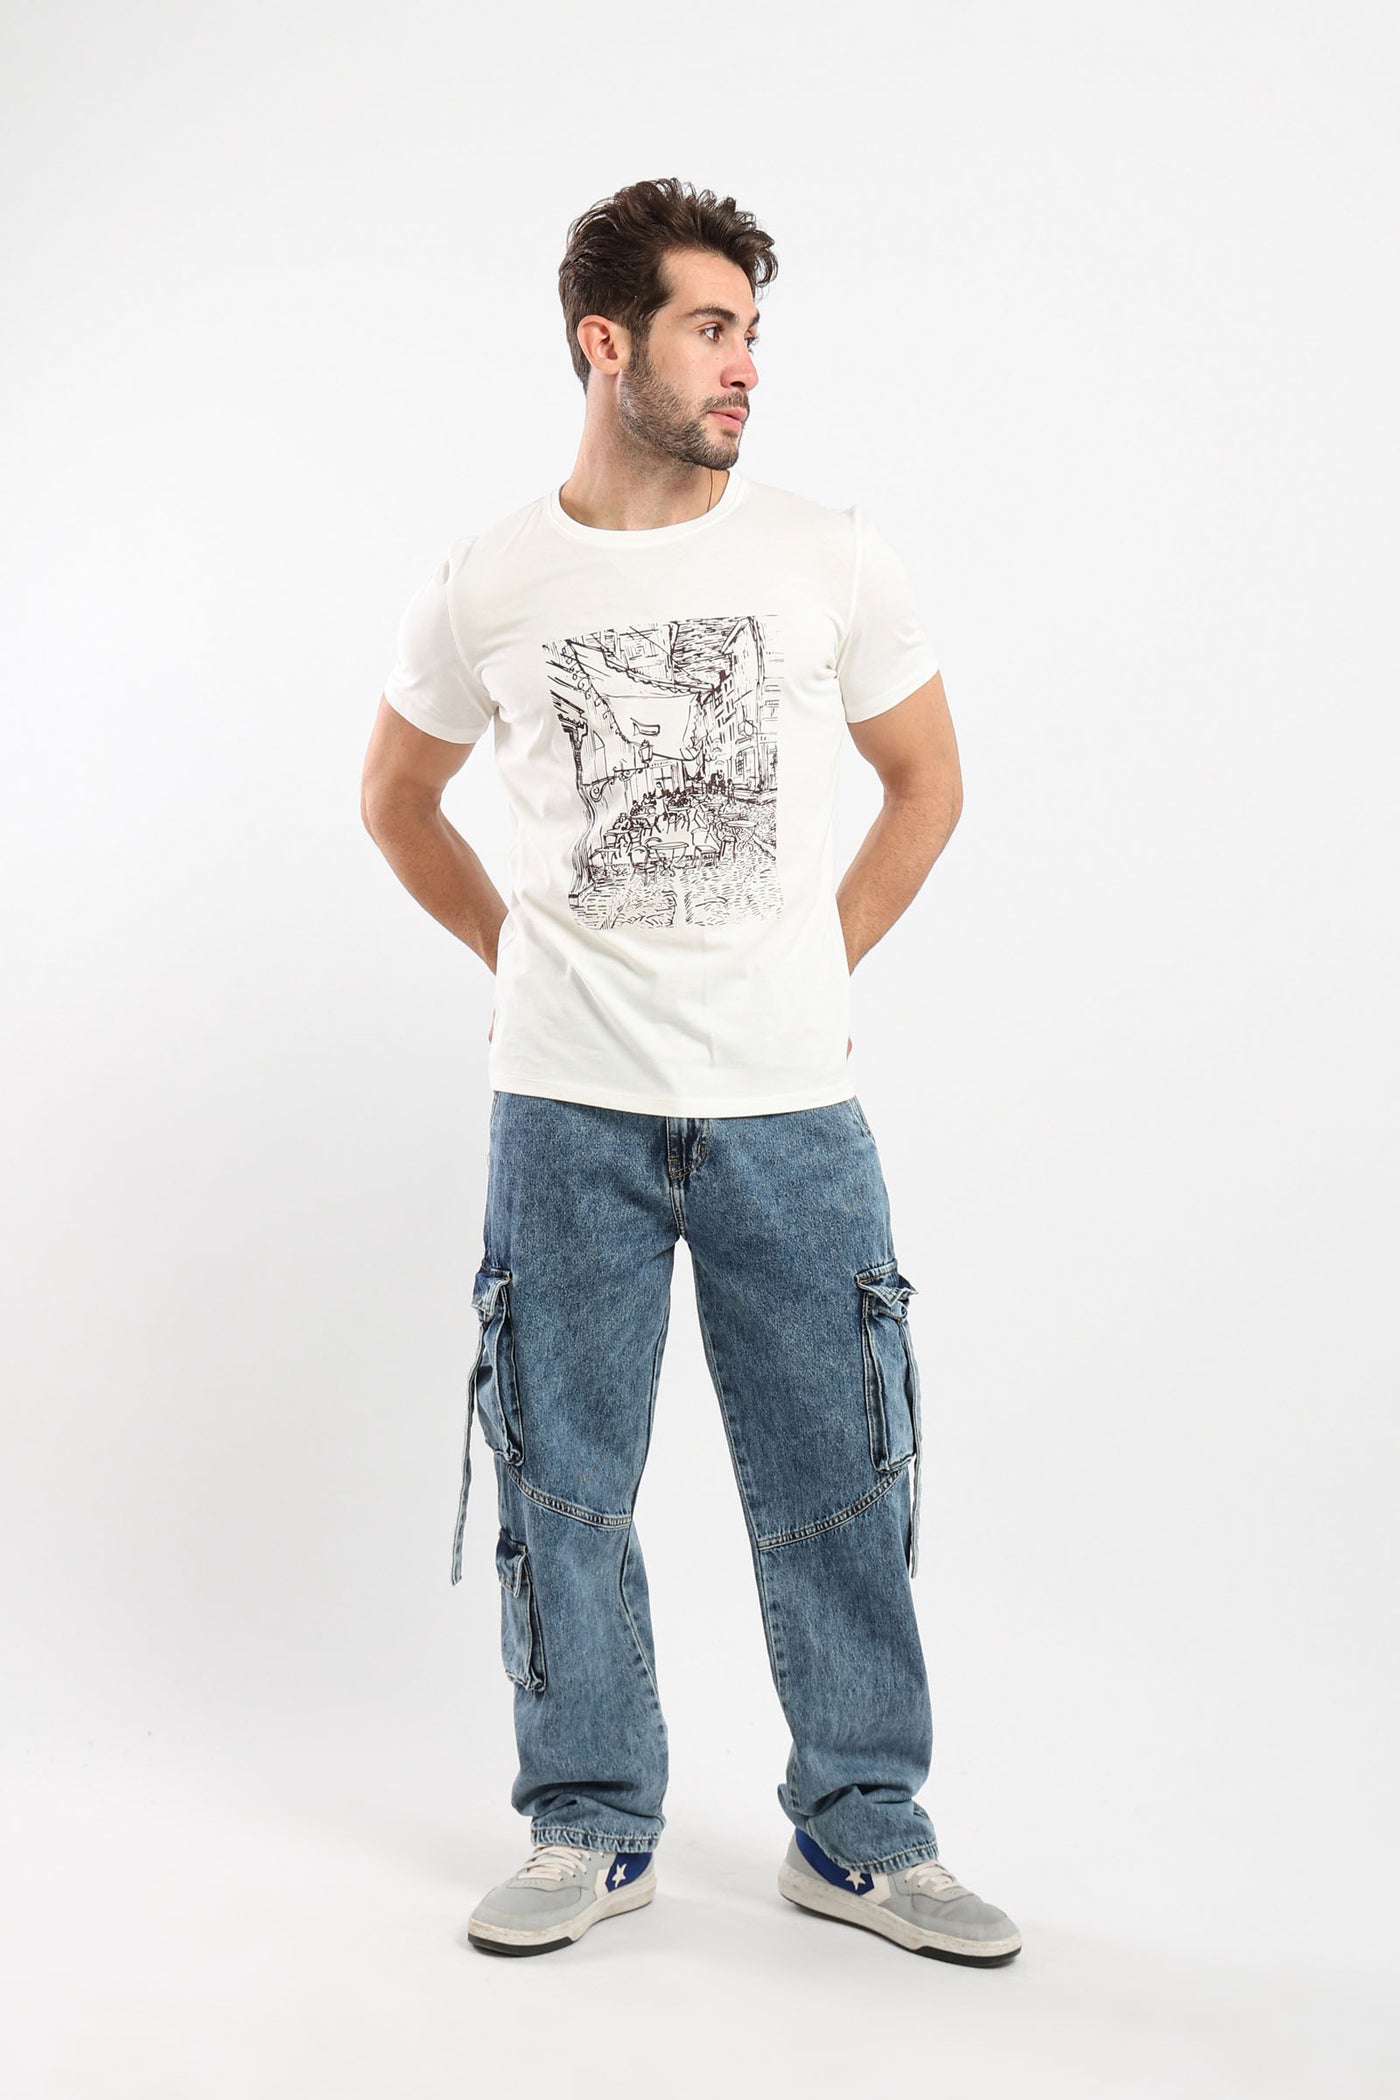 T-Shirt - Short Sleeves - Front Print